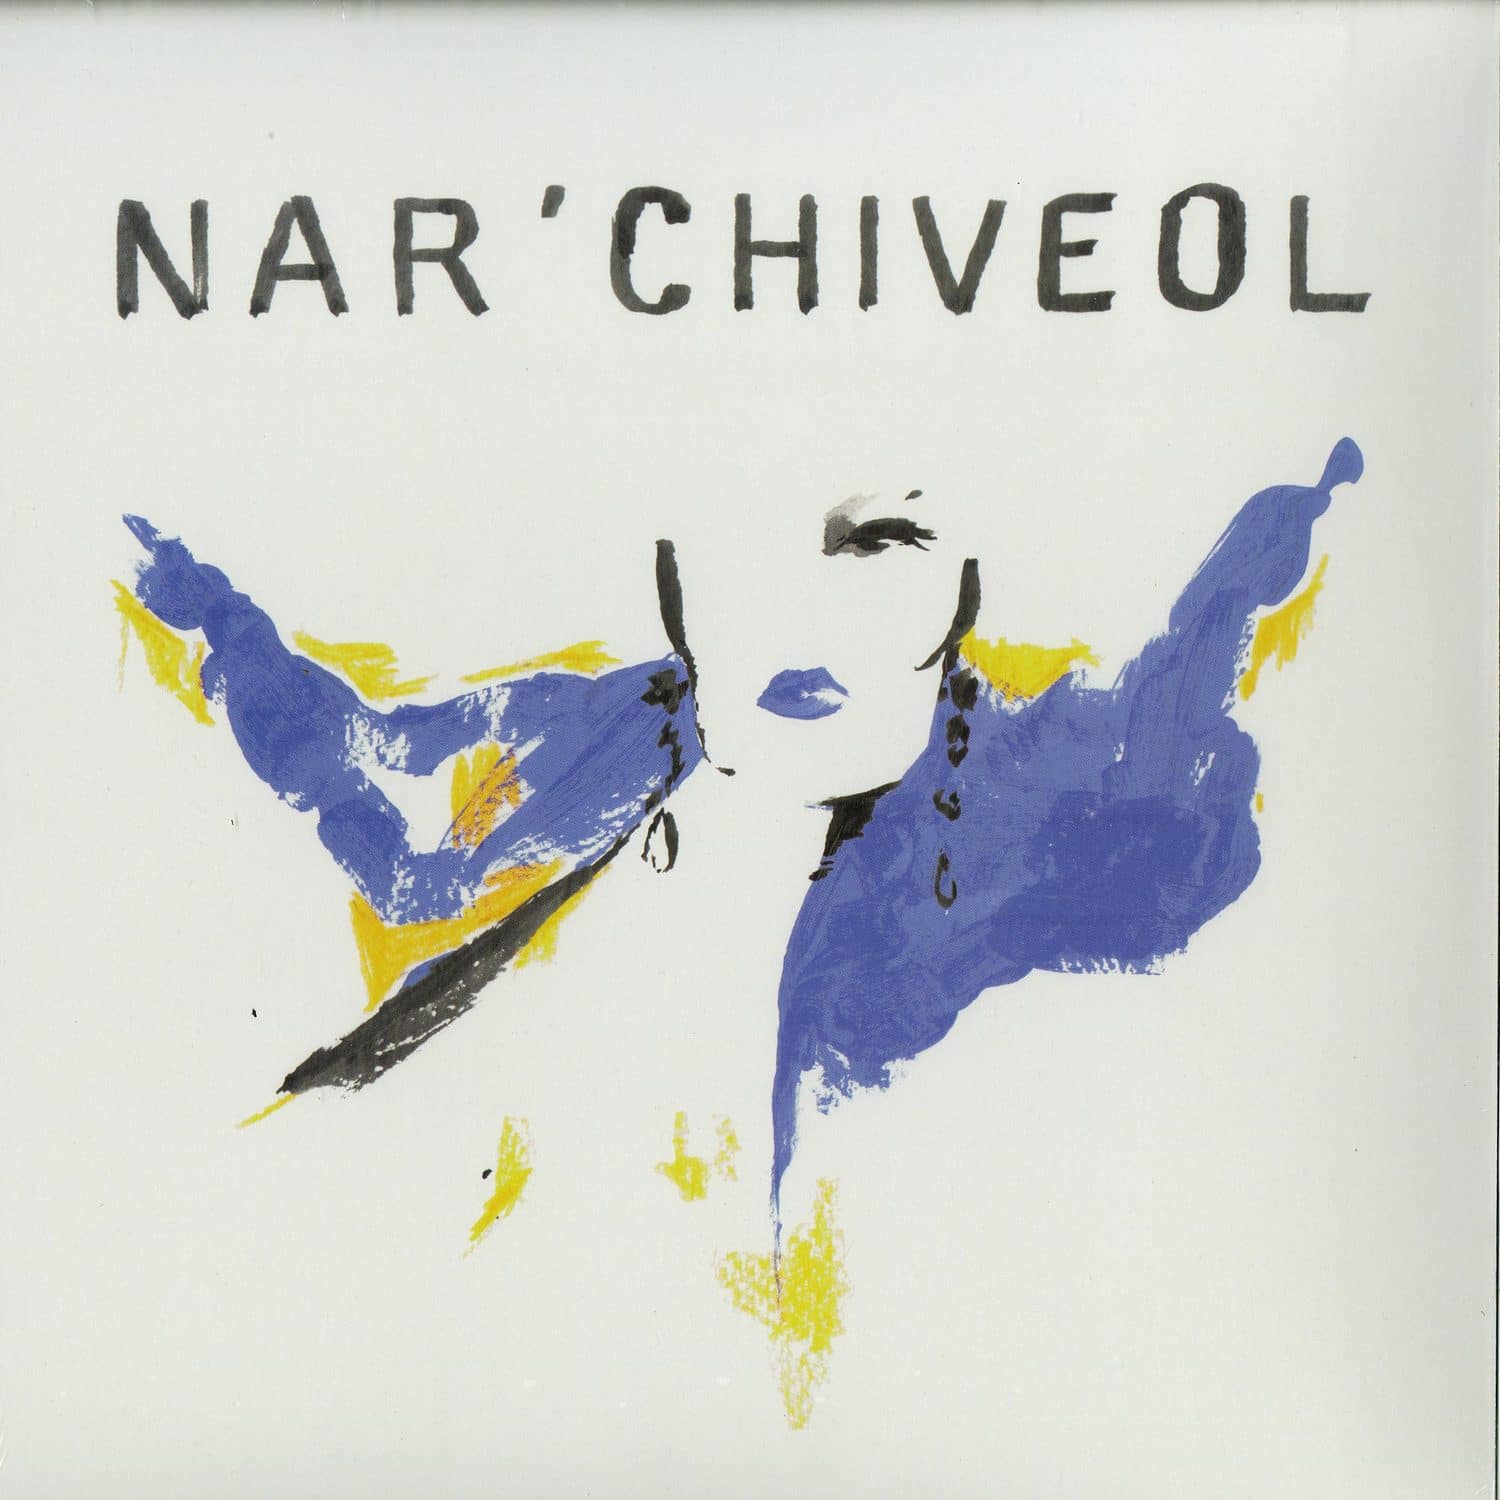 Narchiveol - ESPERANCE MUSIC WIR 